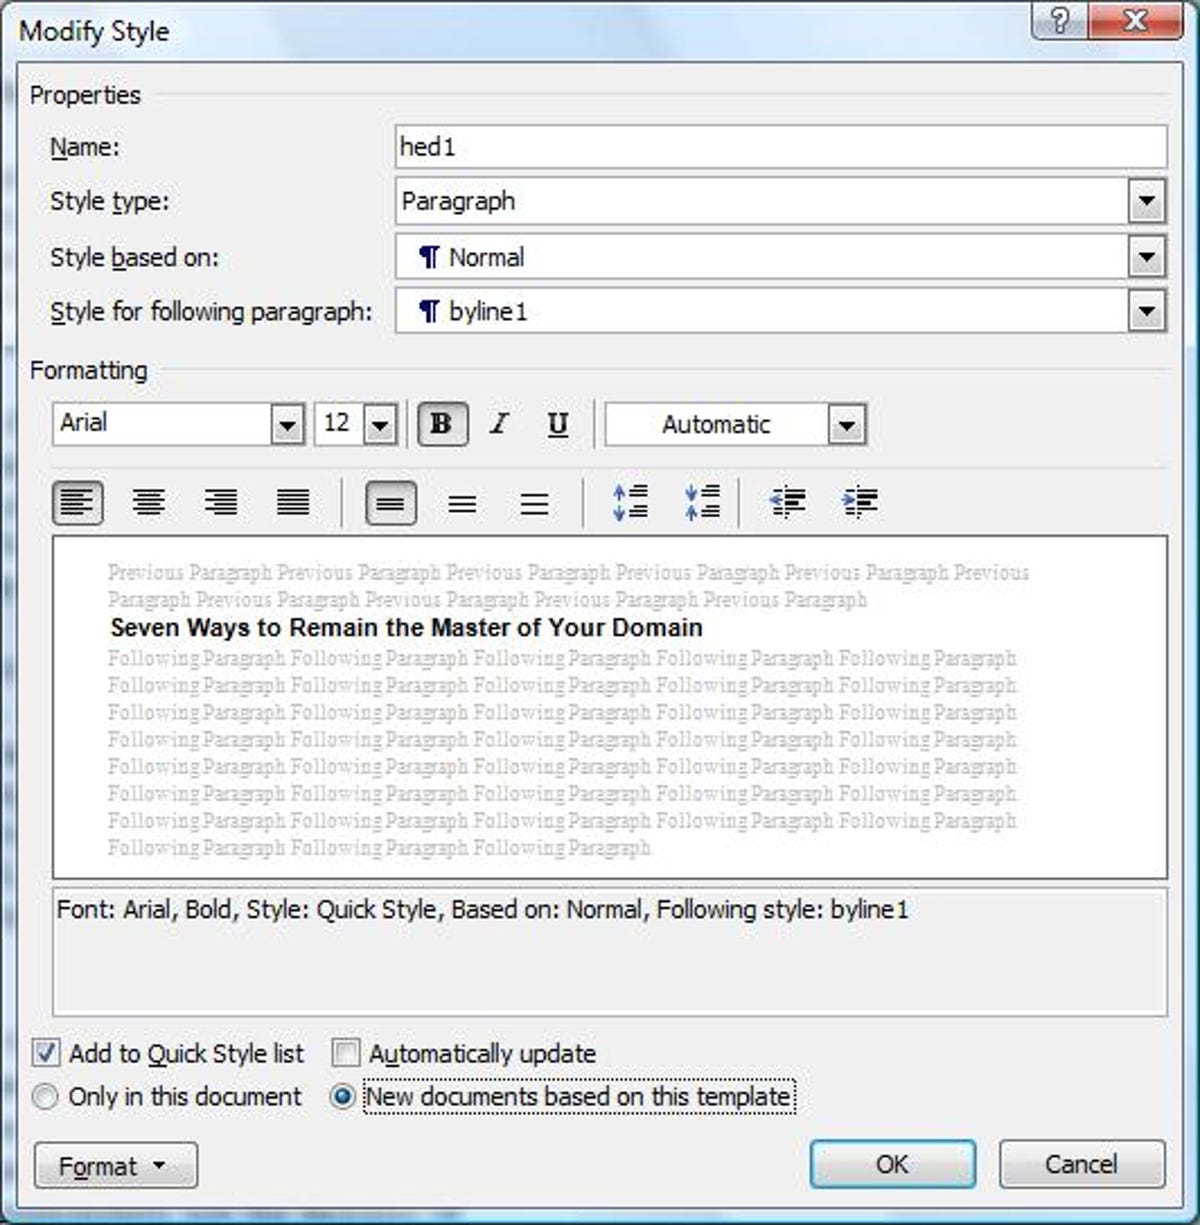 Microsoft Word 2007's Modify Style dialog box